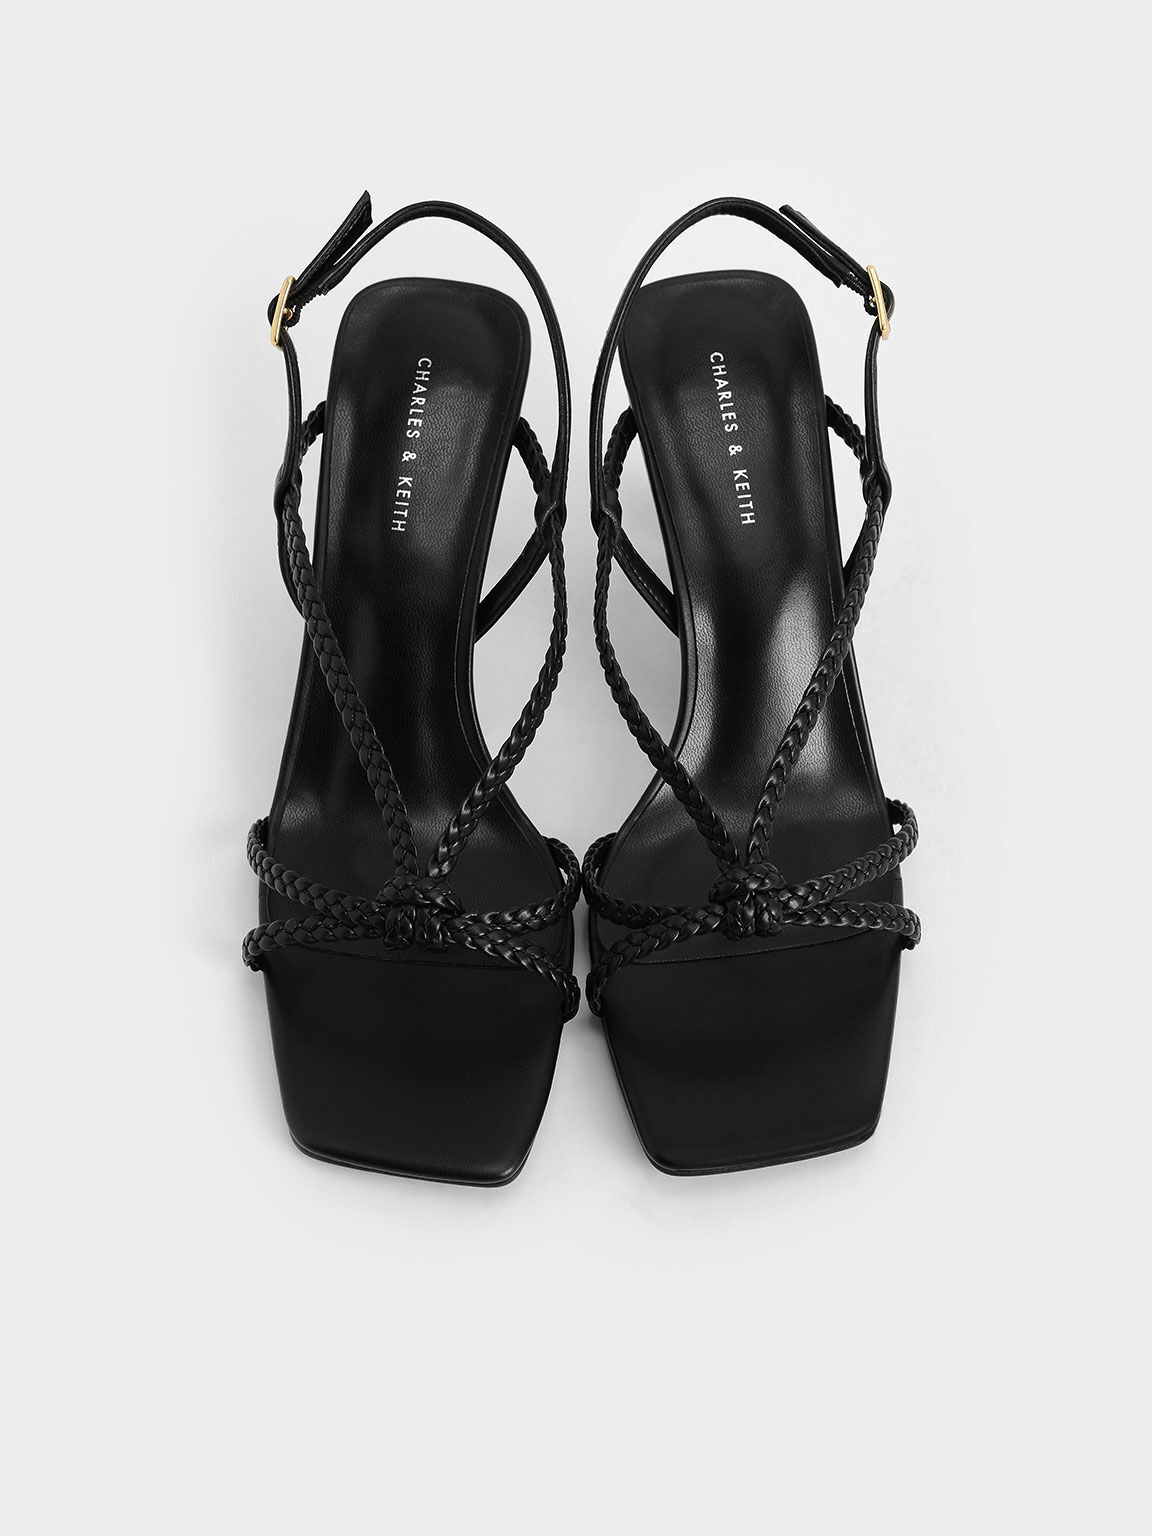 Braided Strap Heeled Sandals, Black, hi-res